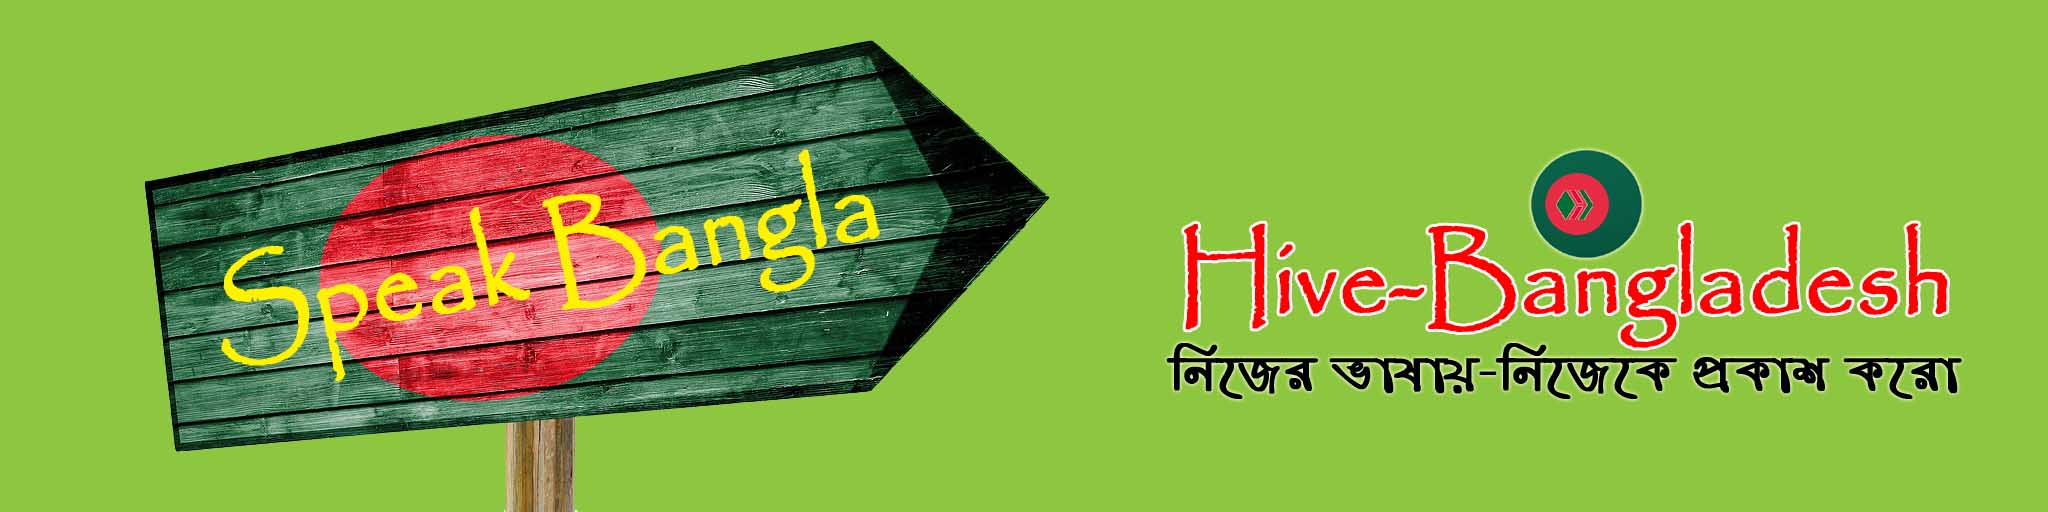 Hive-Bangladesh Banner.jpg